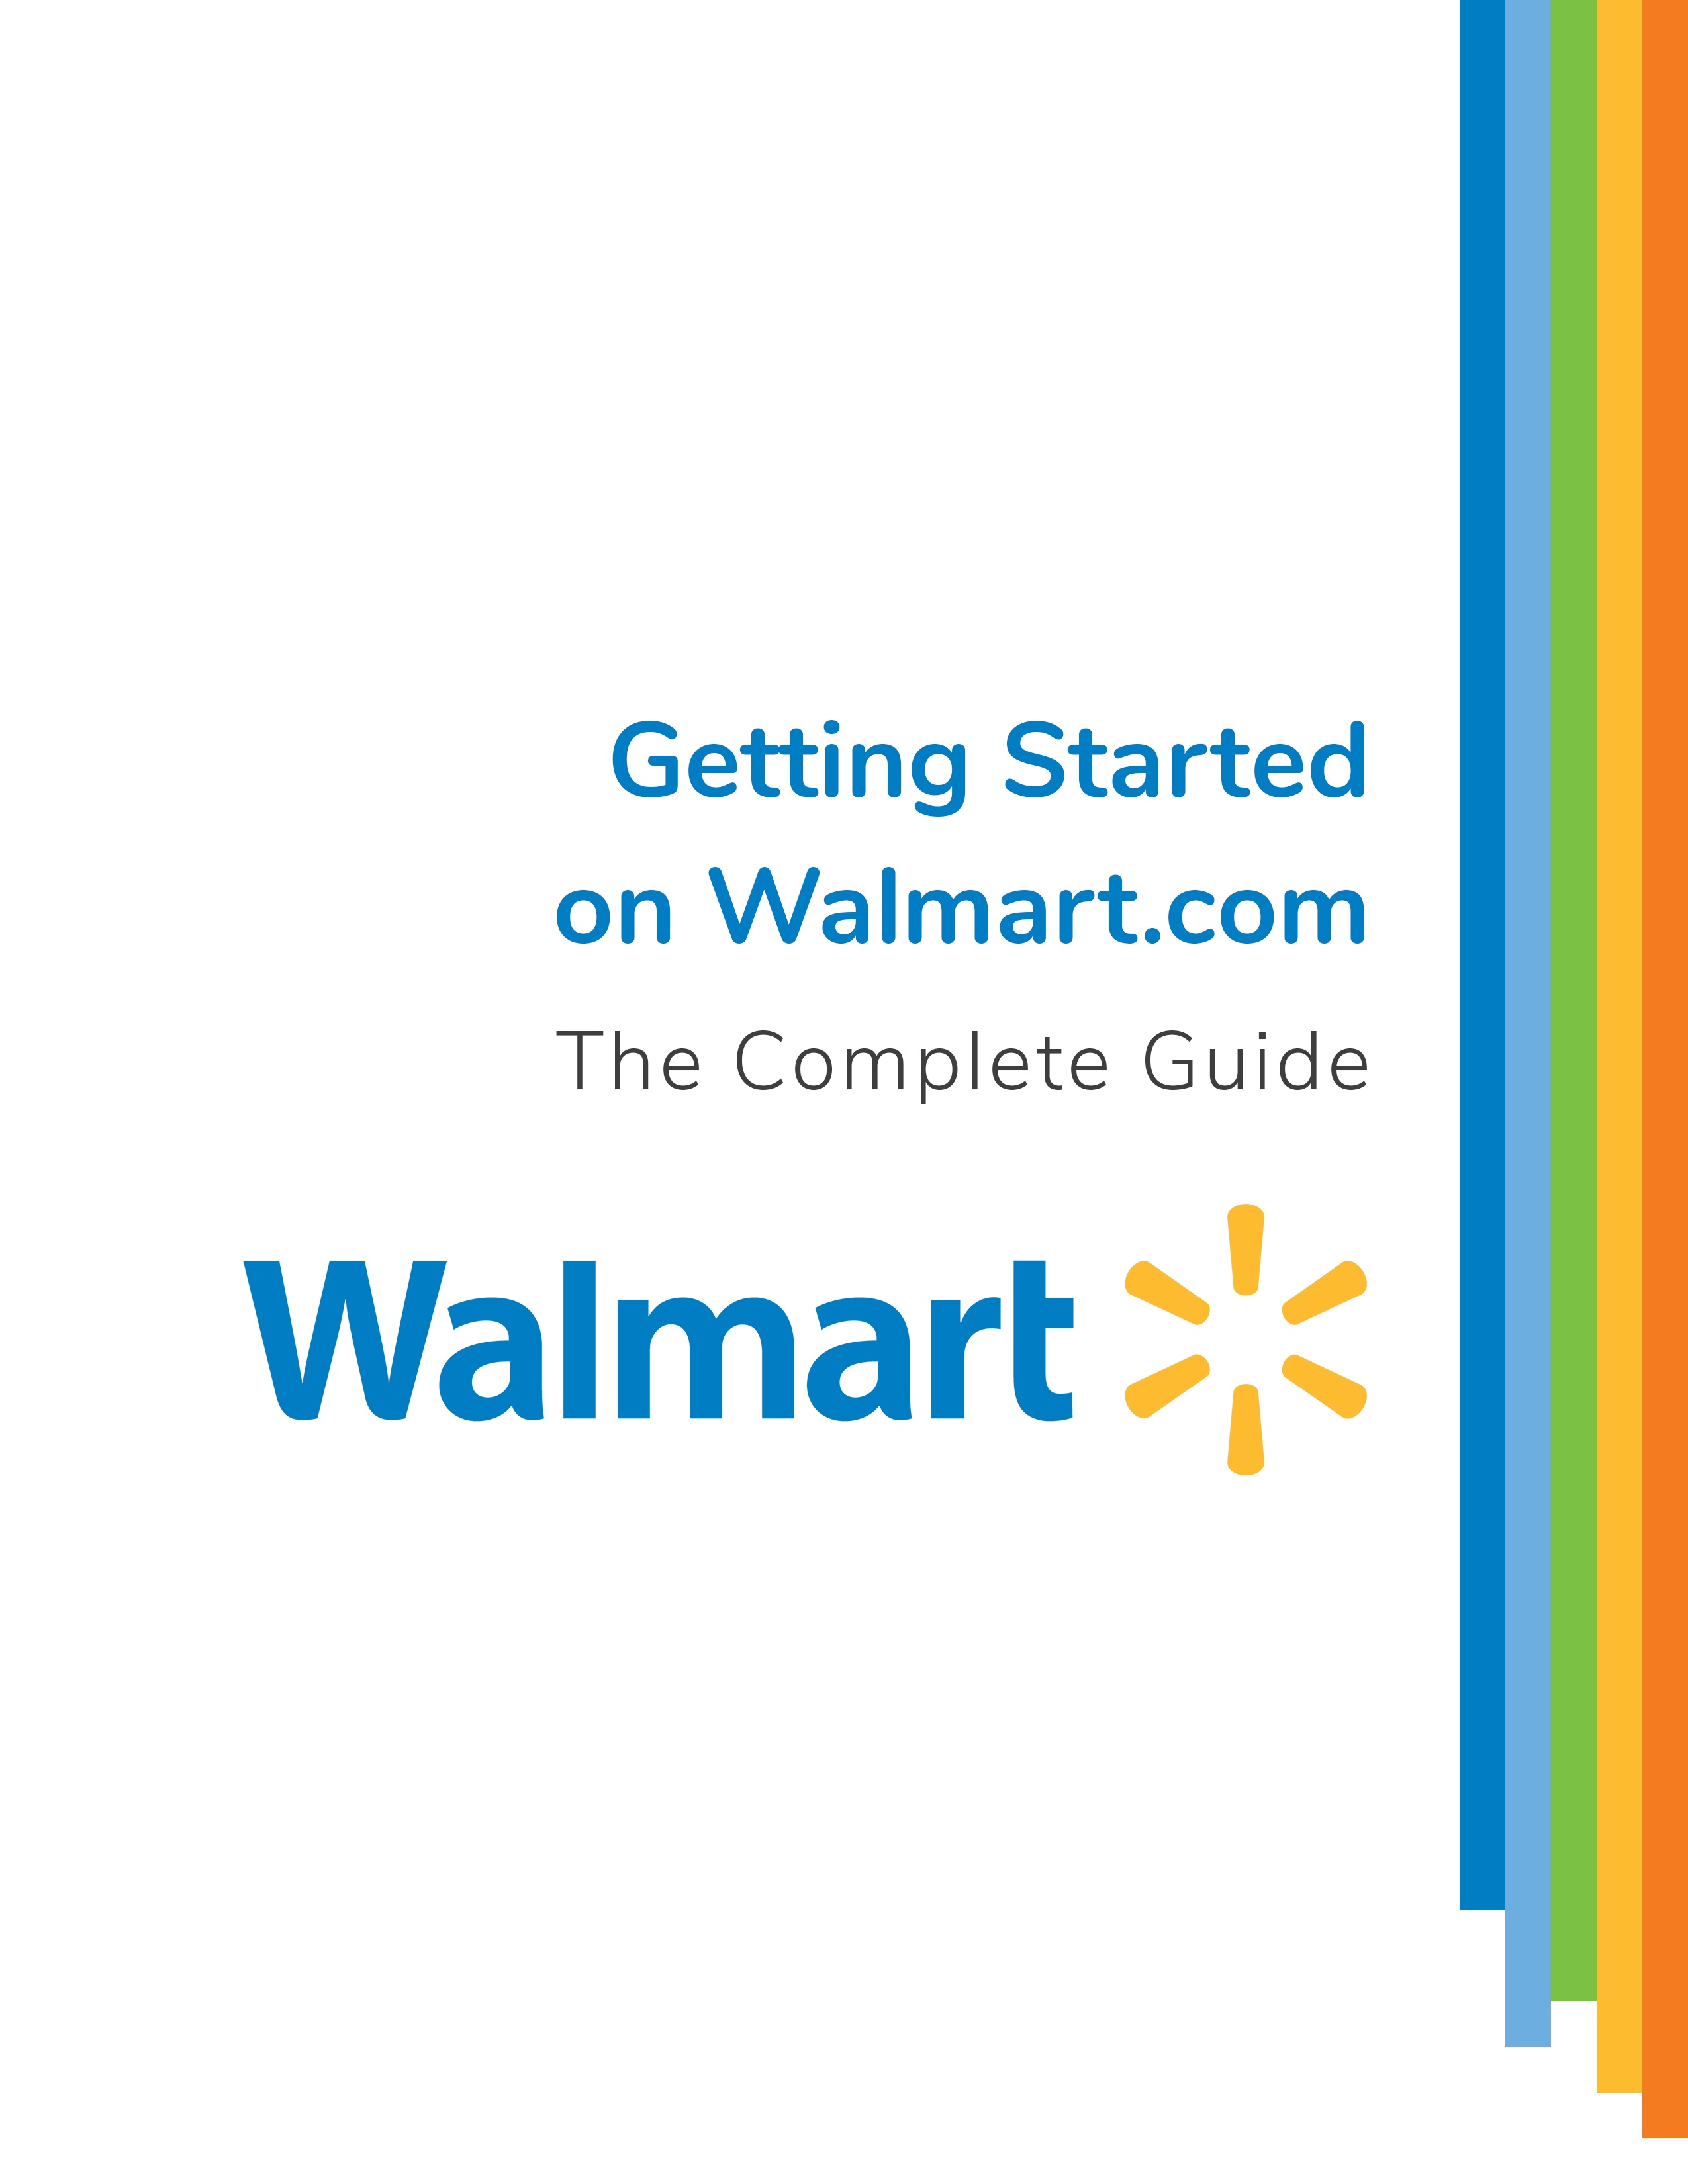 Walmart WP Preview.jpg